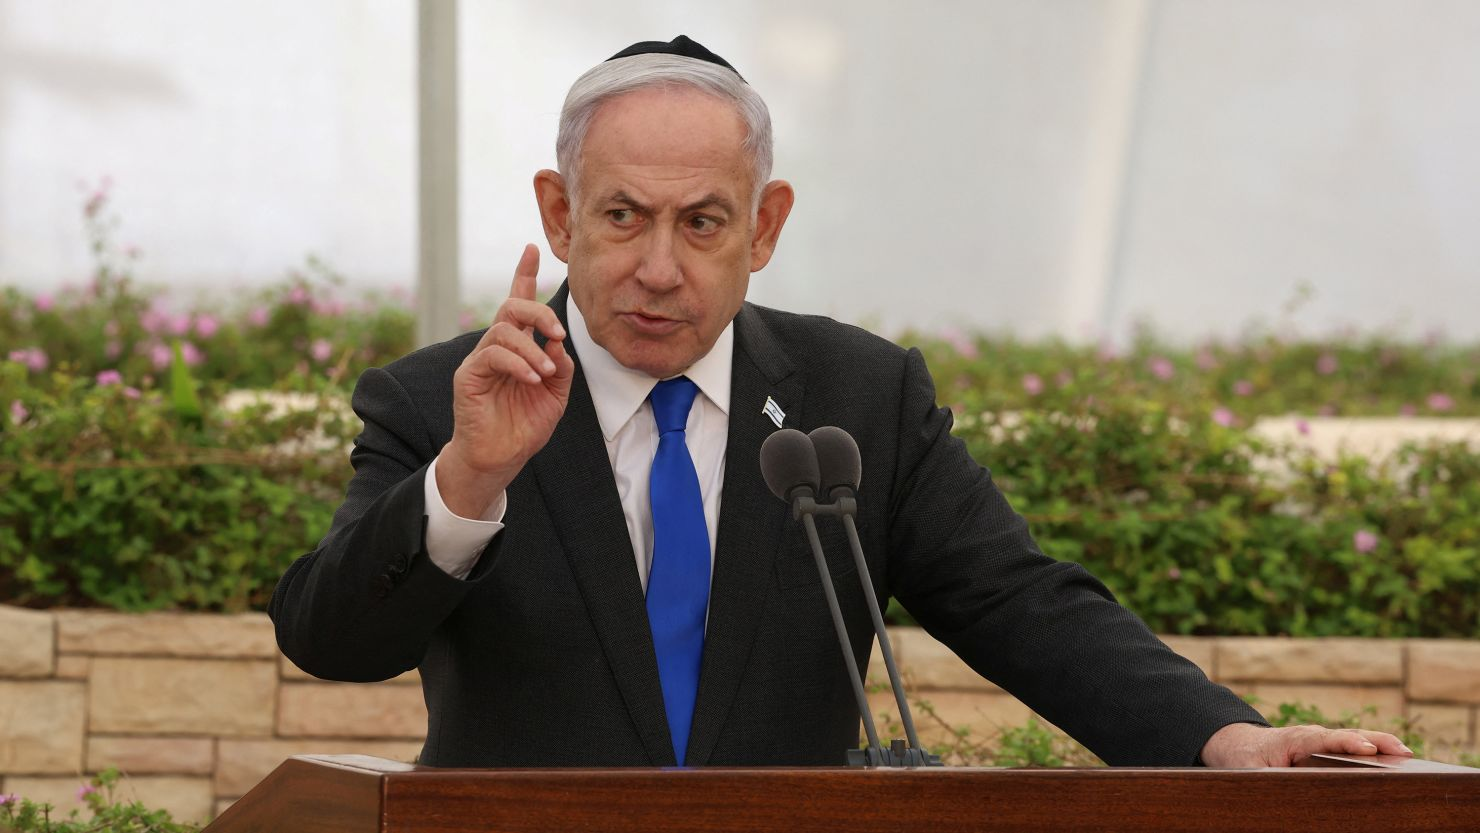 Netanyahu Doubles Down on 'Missing' Arms Claim, Despite U.S. Denial